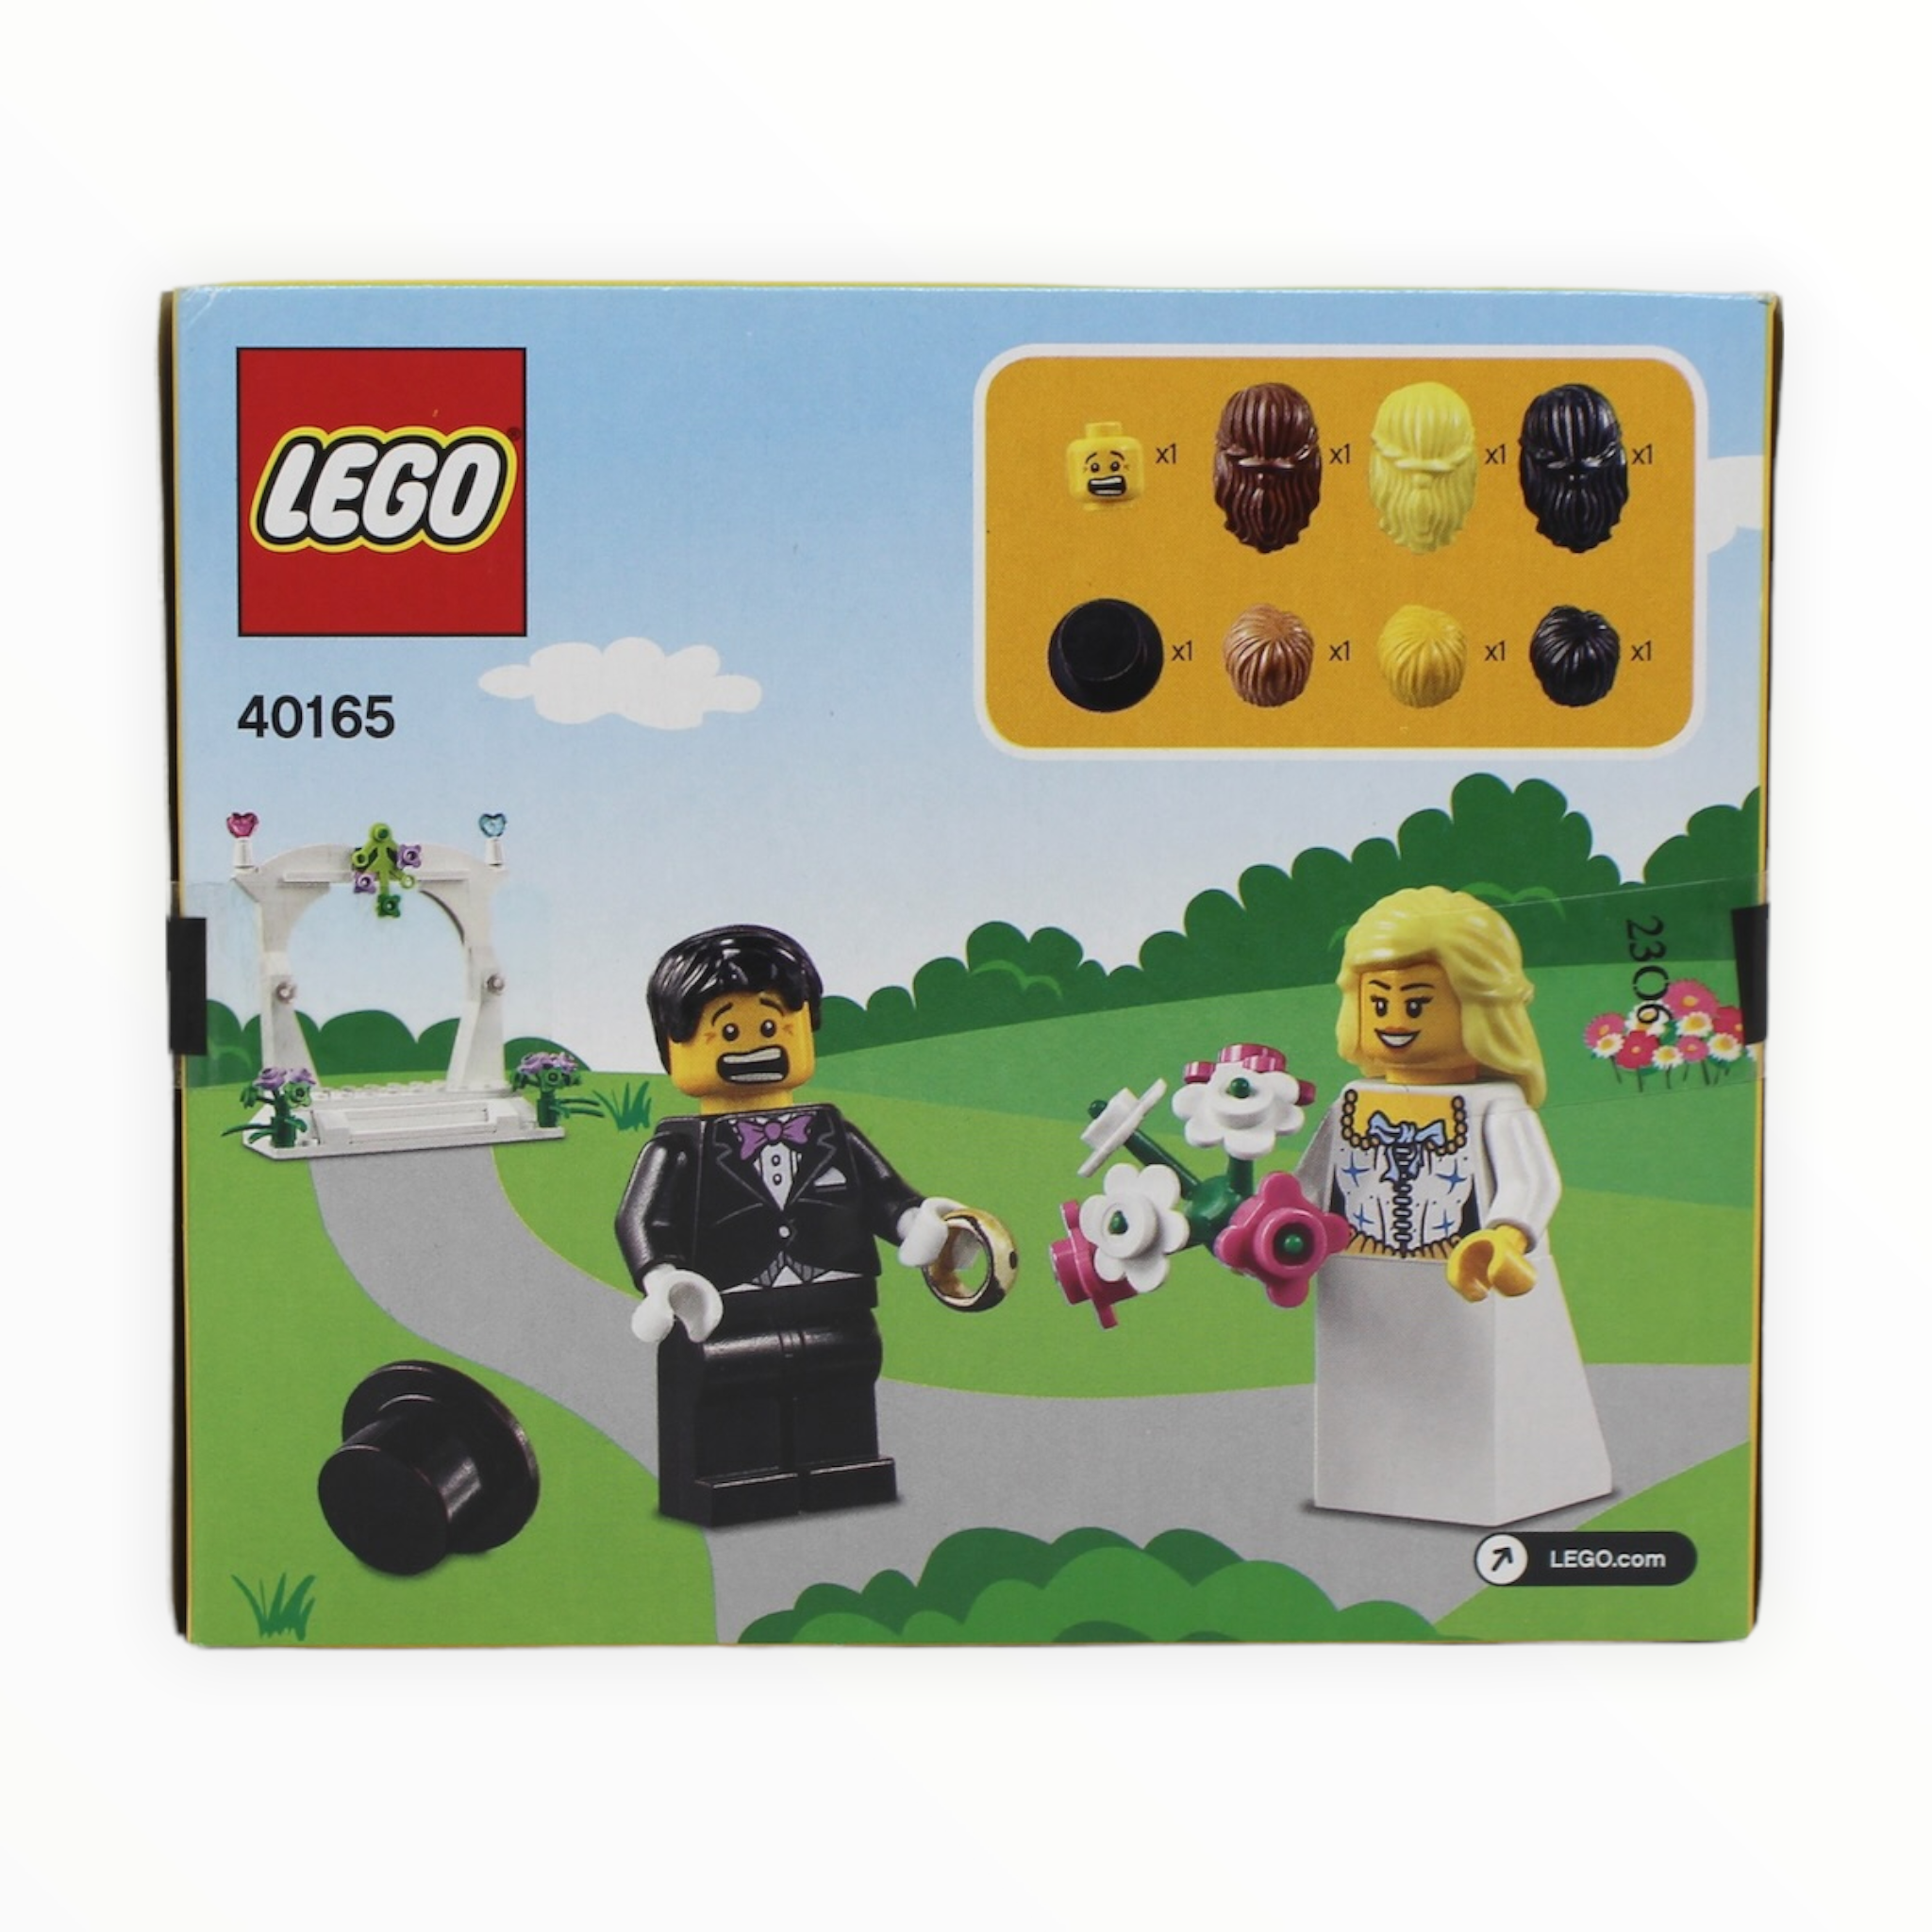 Retired Set 40165 LEGO Wedding Favor Set (2016)